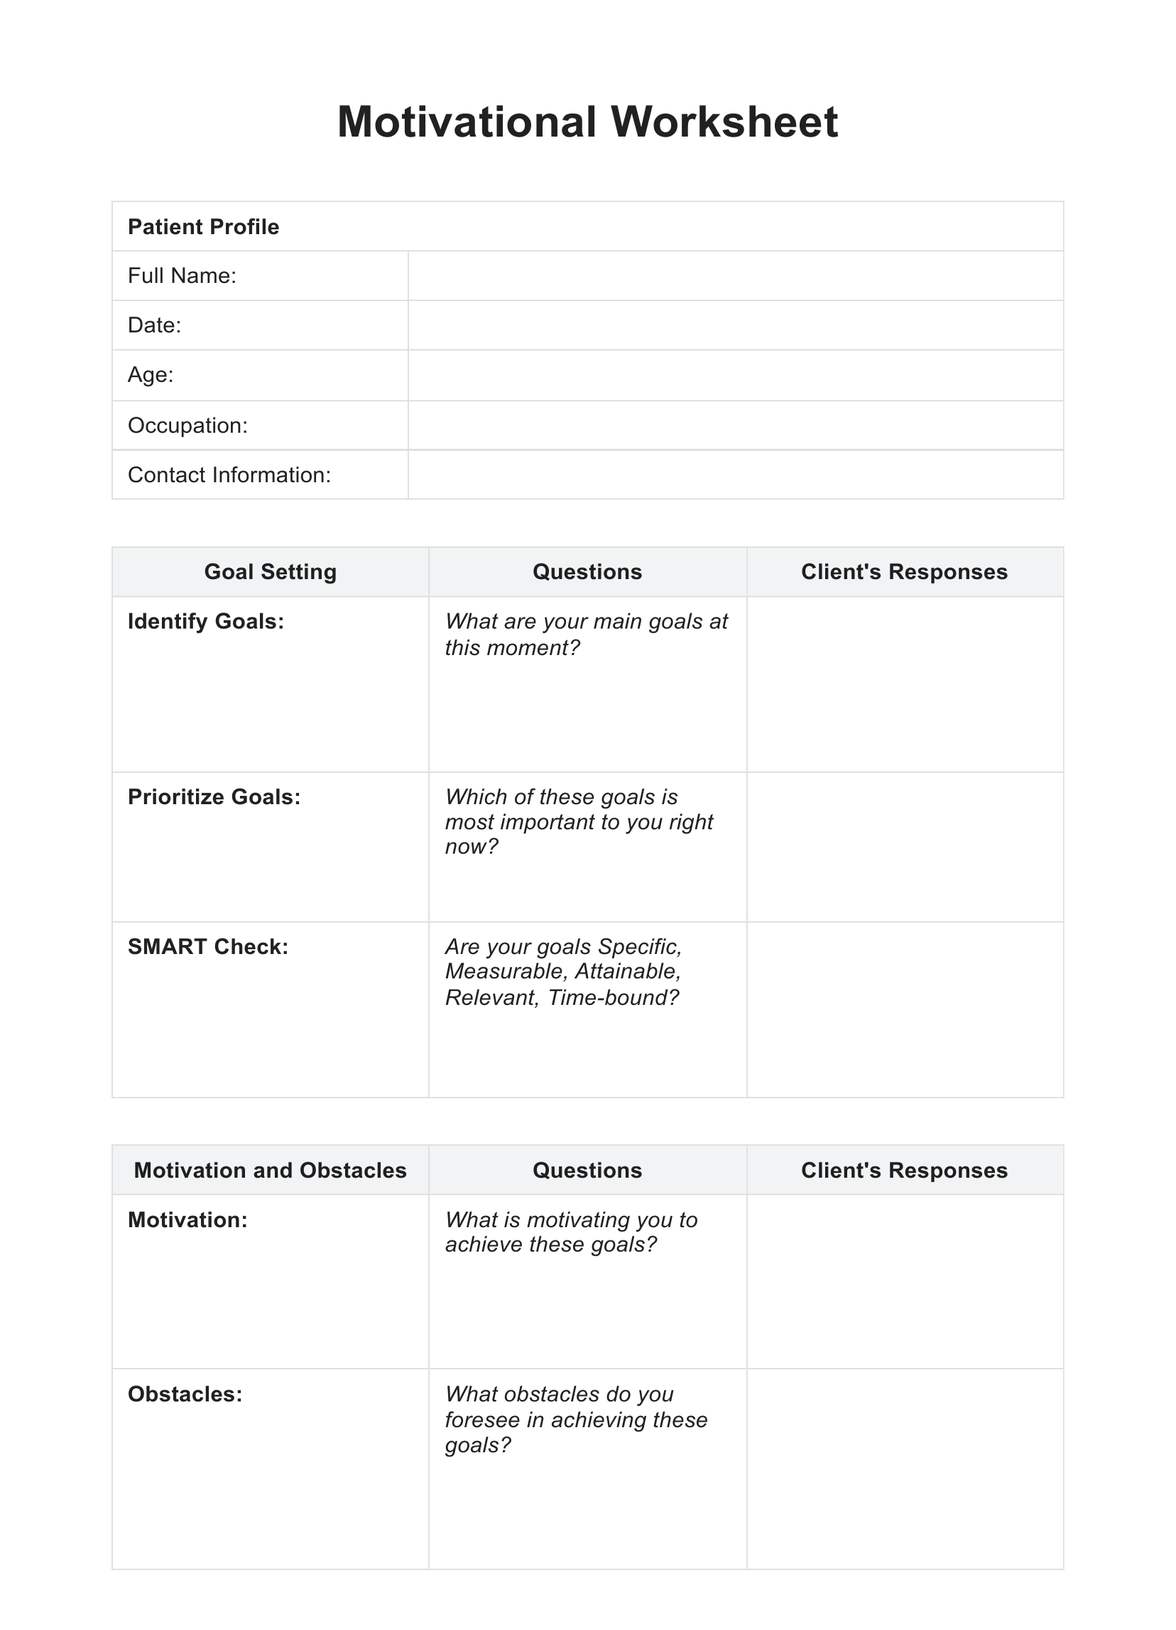 Motivational Worksheet PDF Example